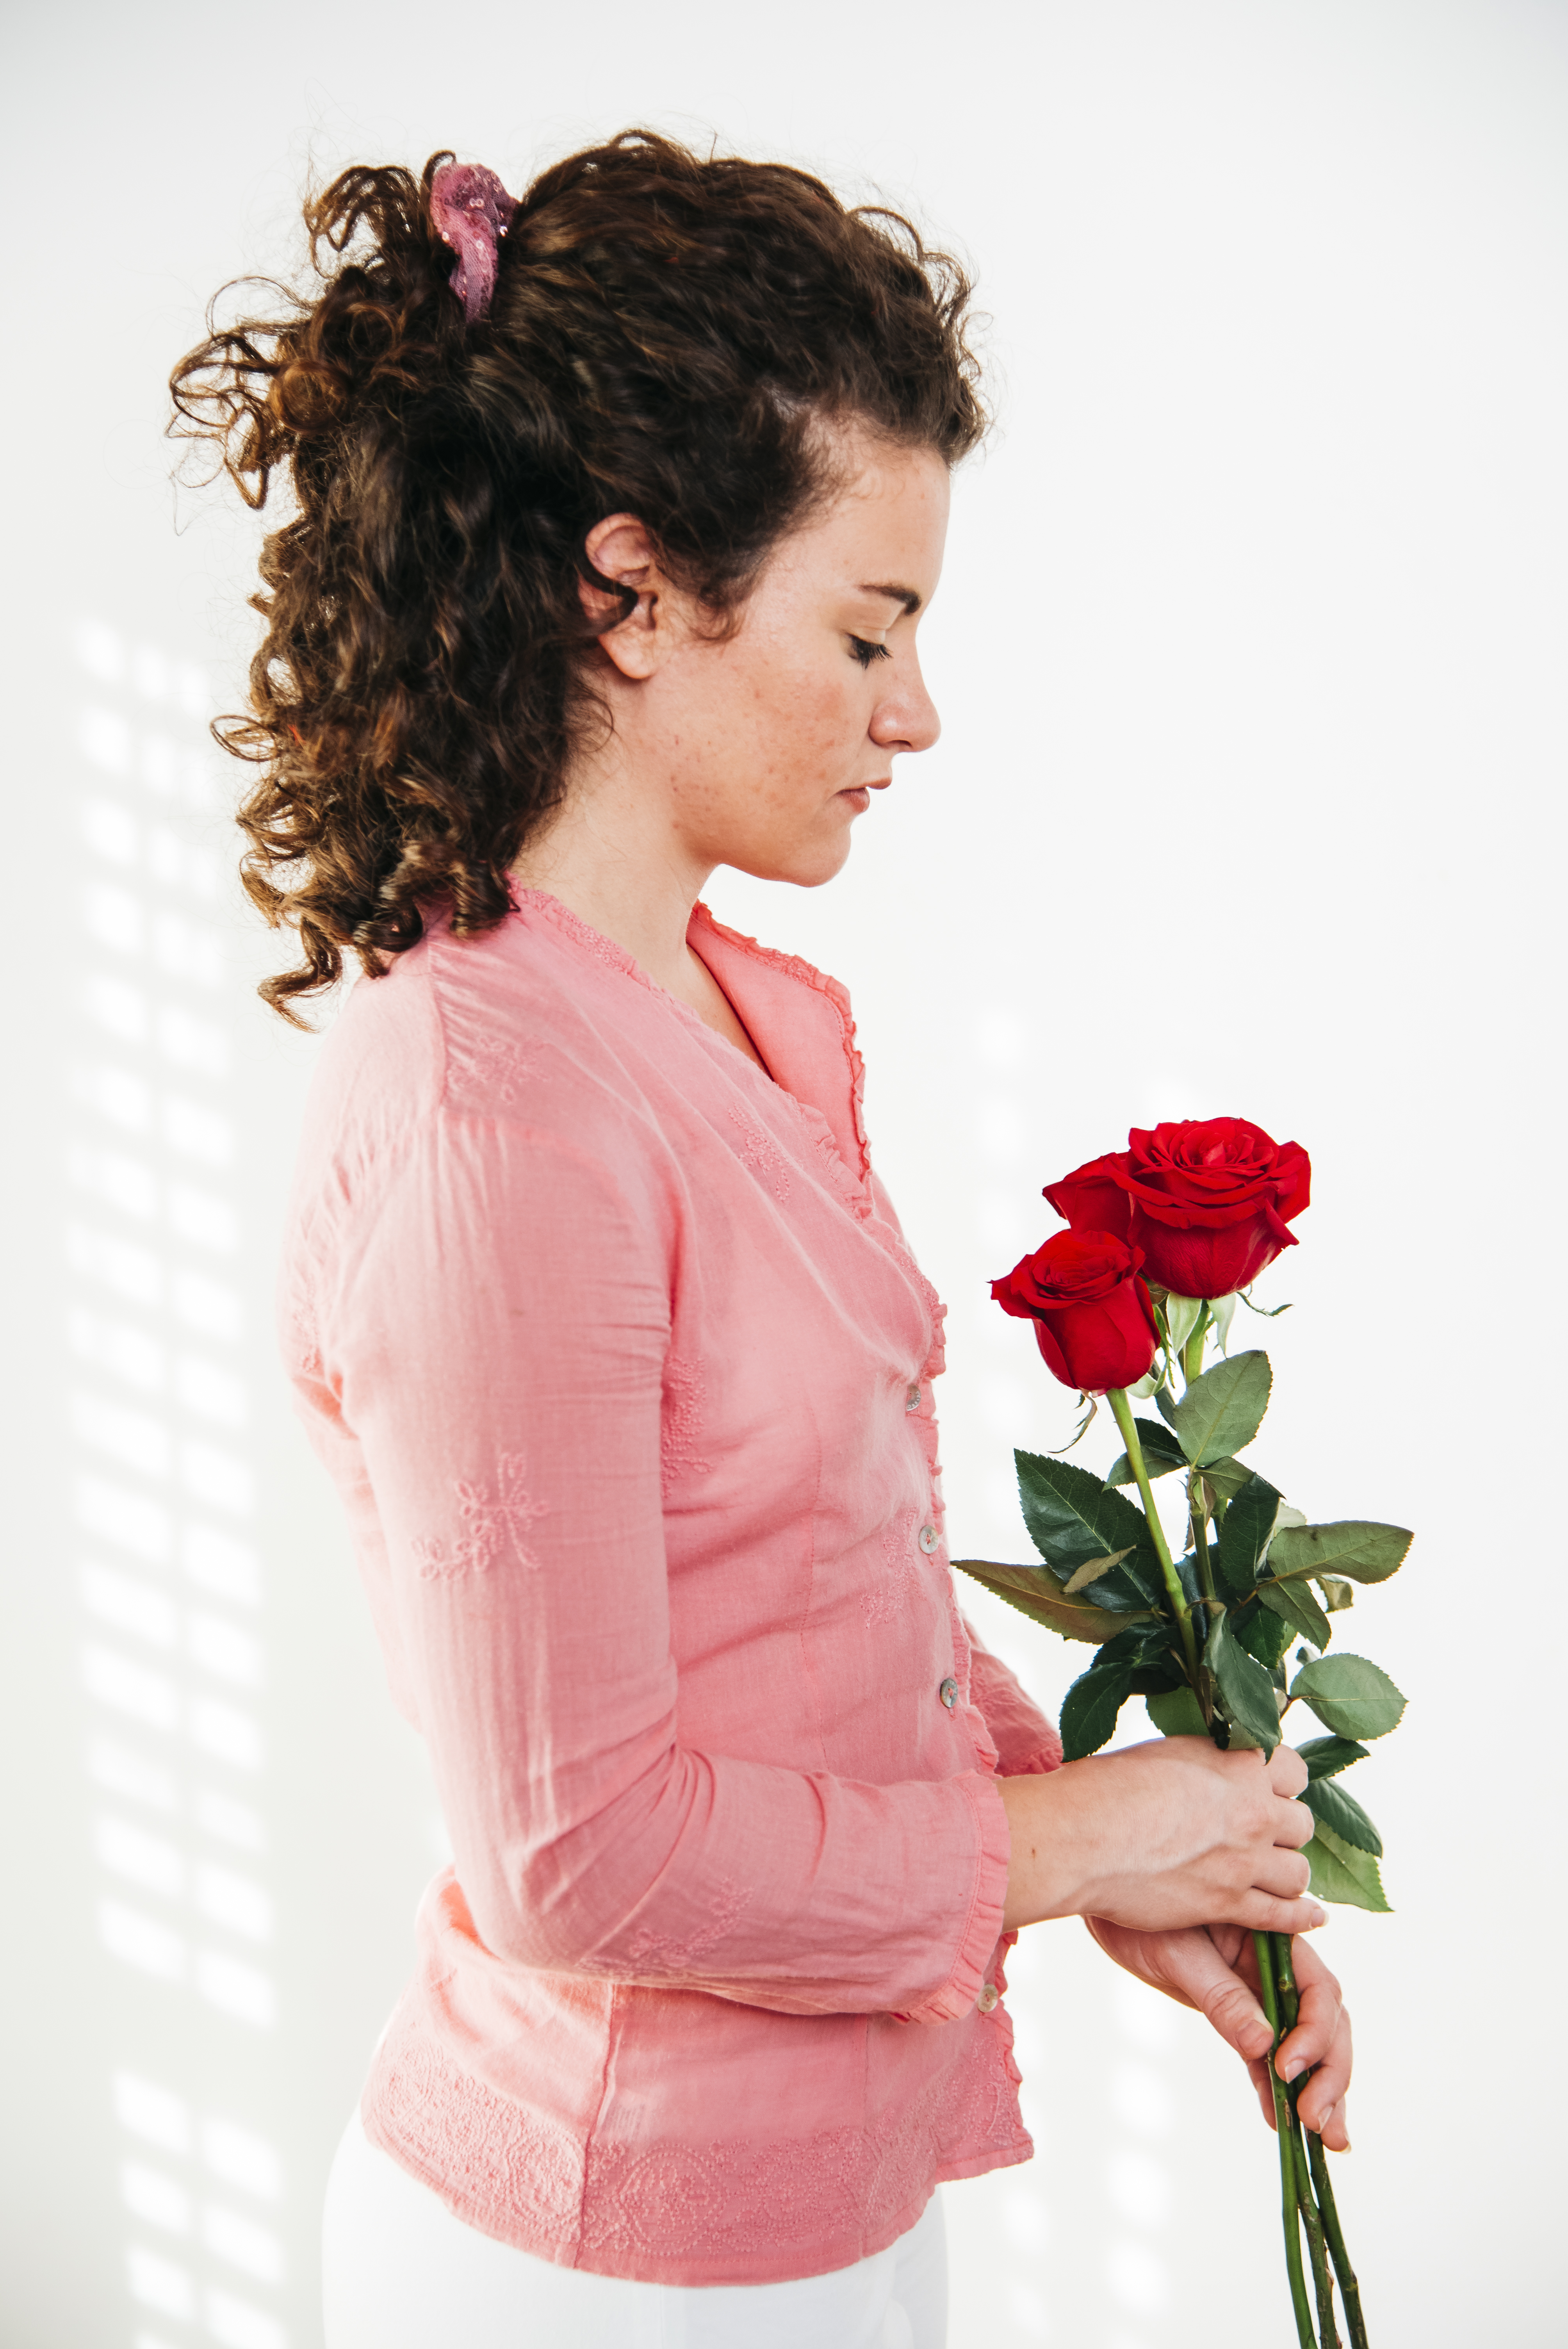 Eine Frau hält Rosen | Quelle: FreePik